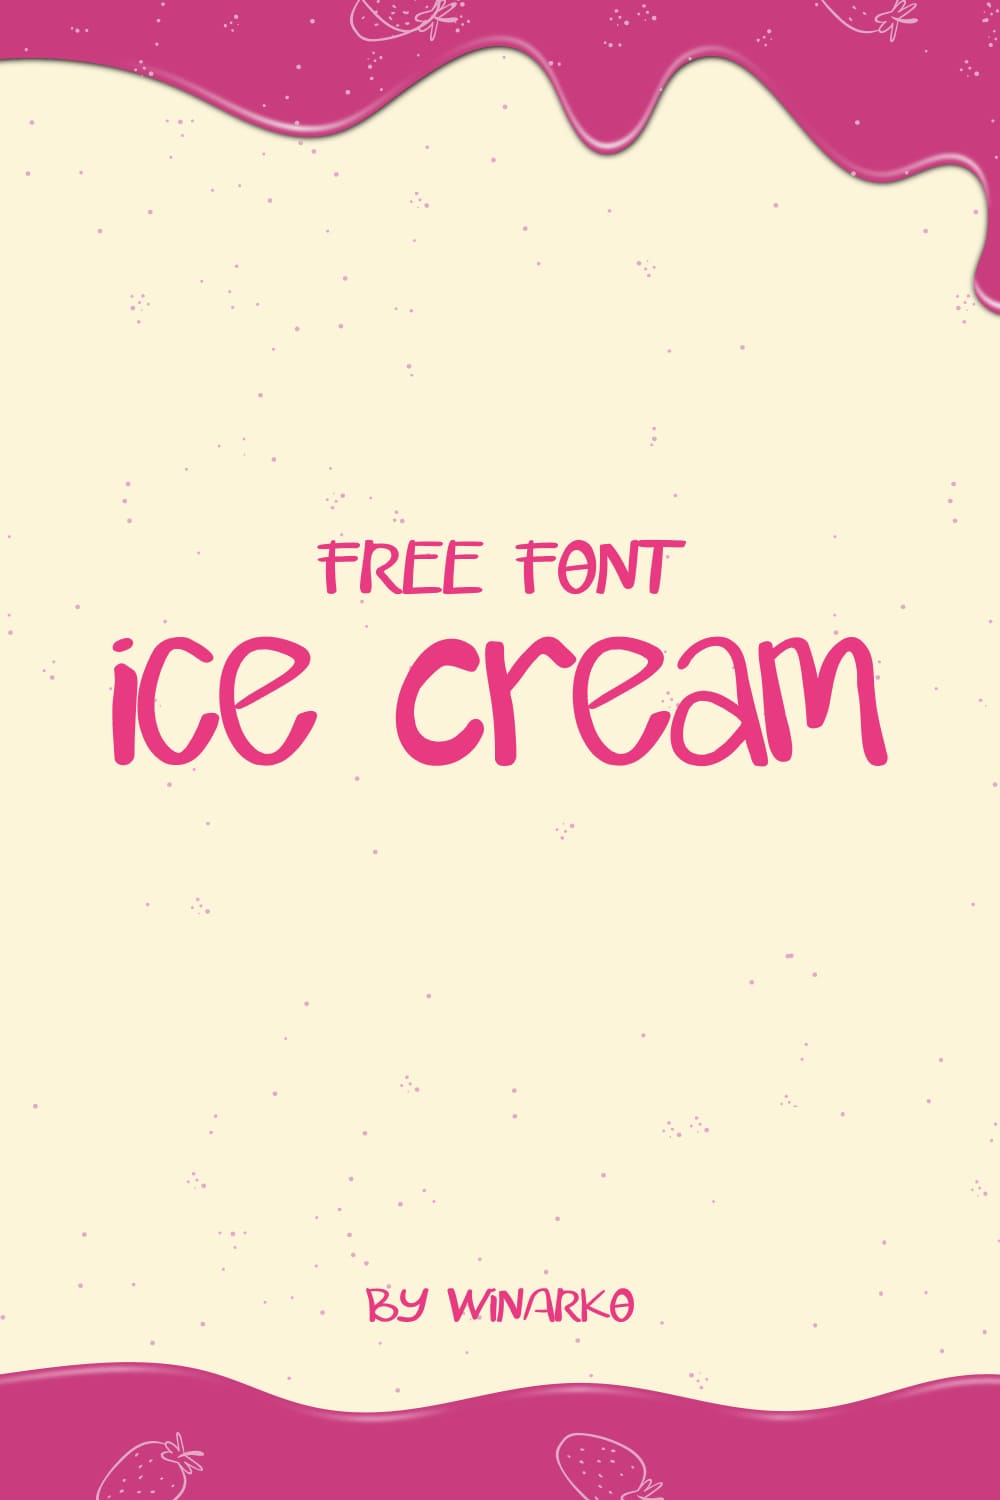 Free Ice Cream Script Pinterest Collage Image by MasterBundles.